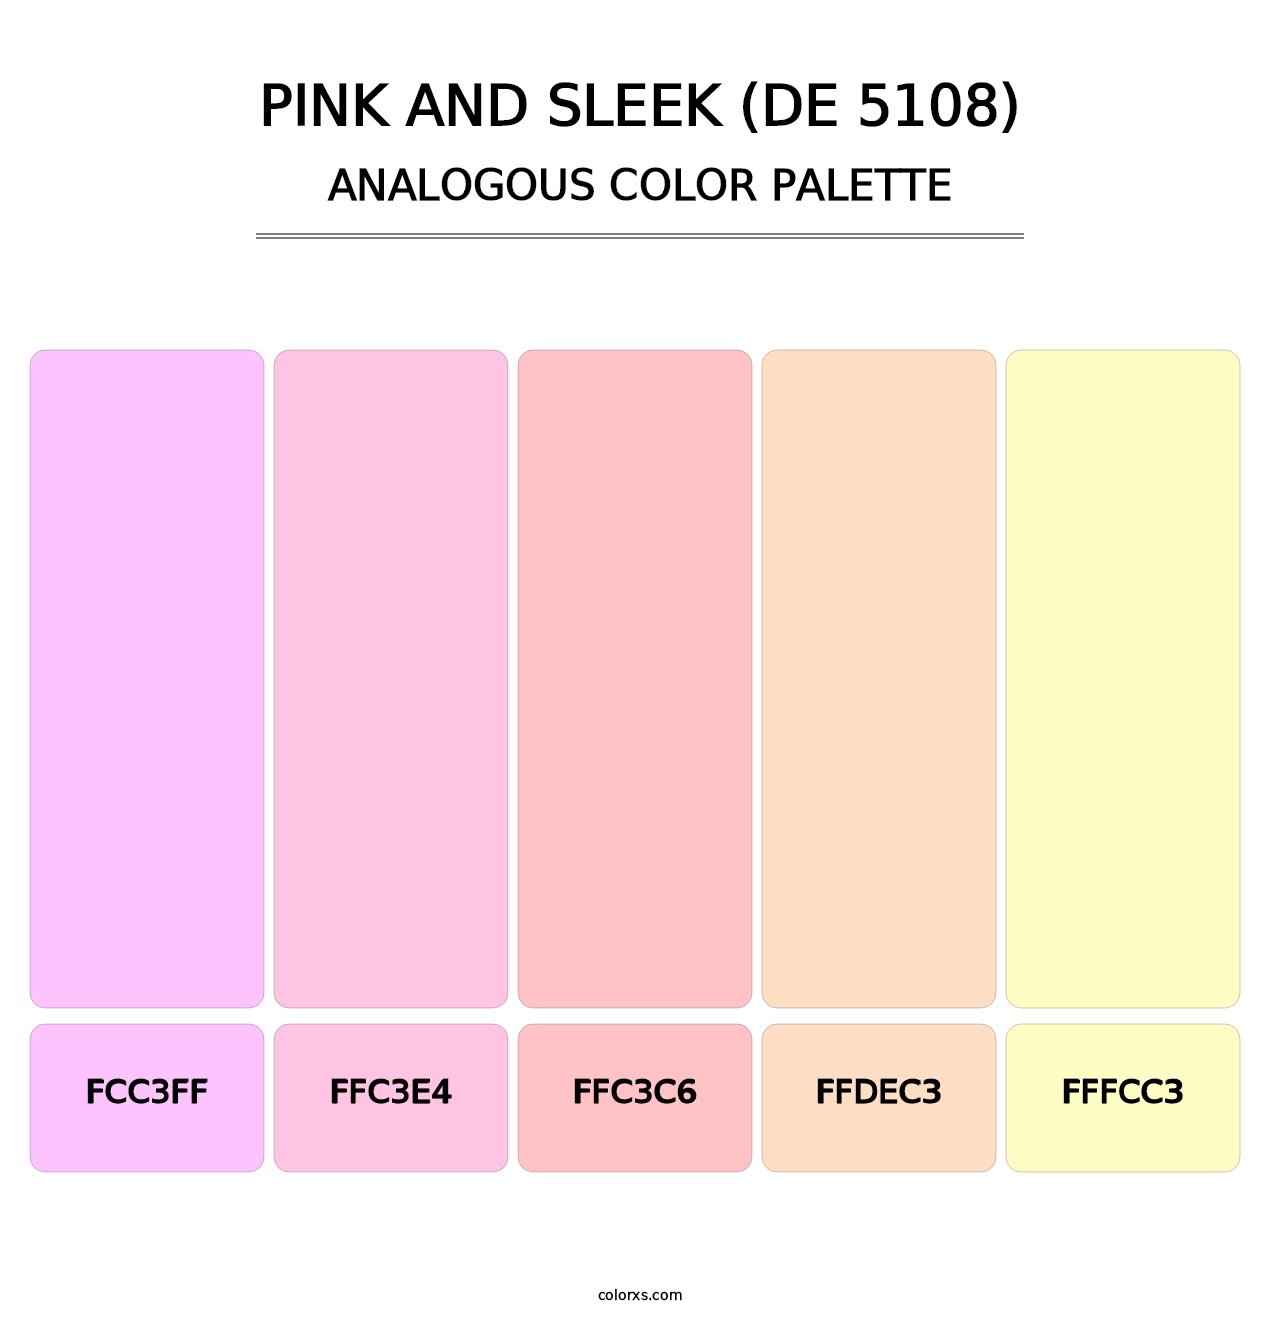 Pink and Sleek (DE 5108) - Analogous Color Palette